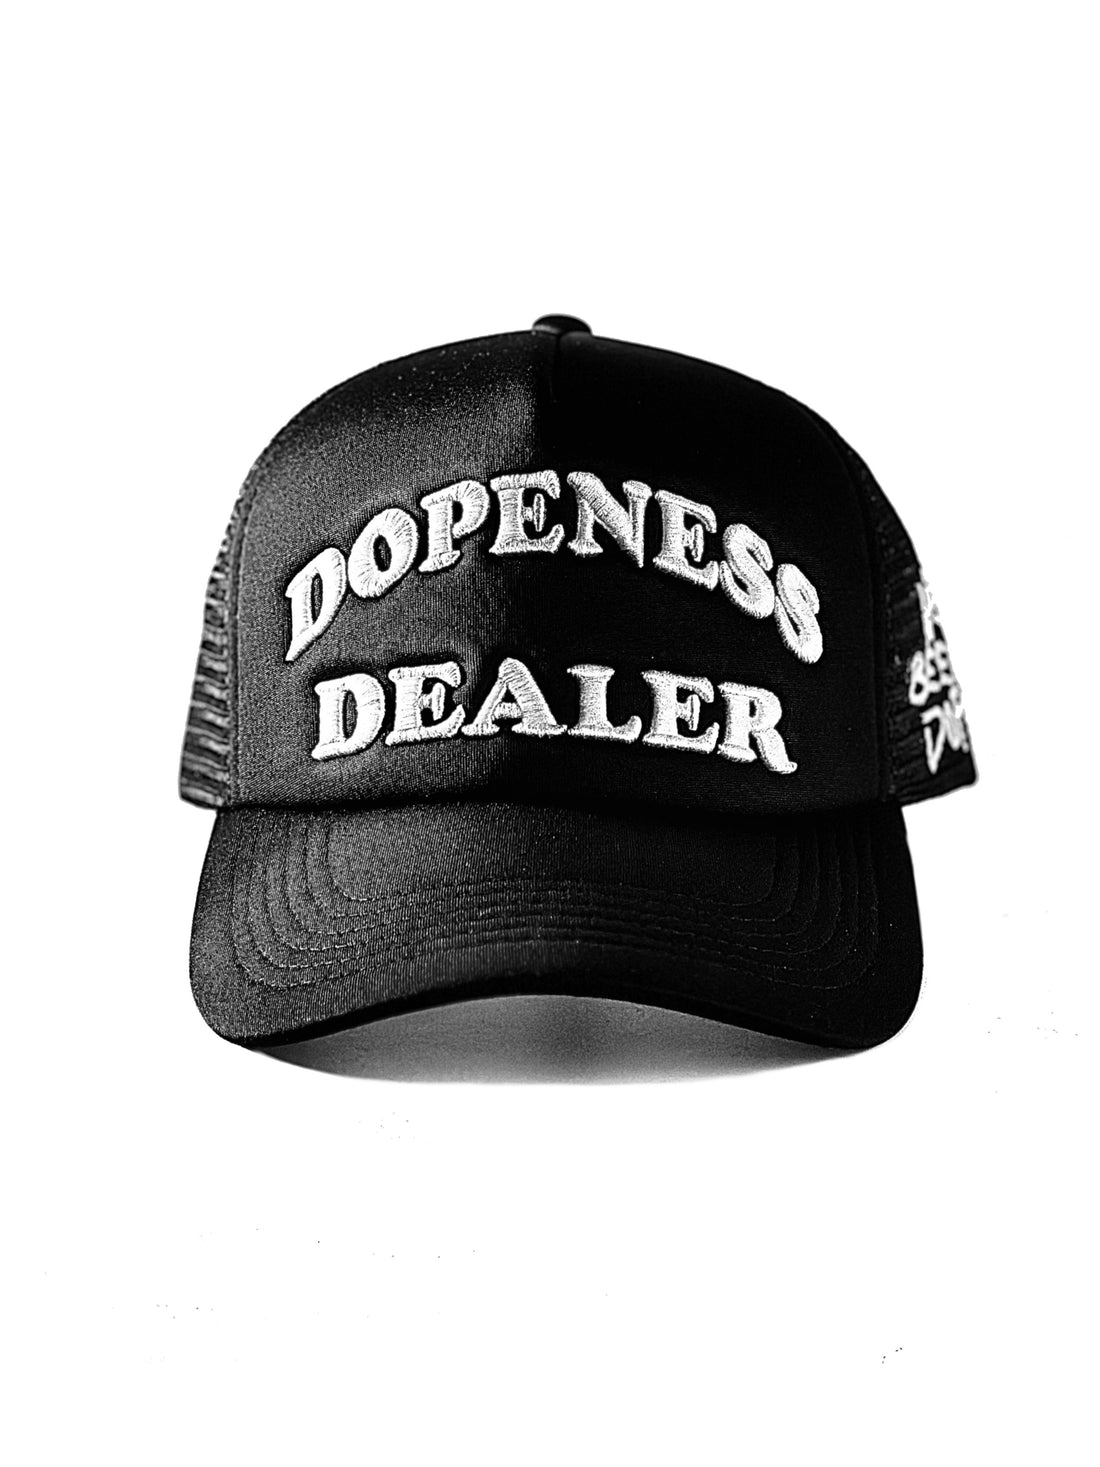 Dopeness Dealer Trucker hat (Black)